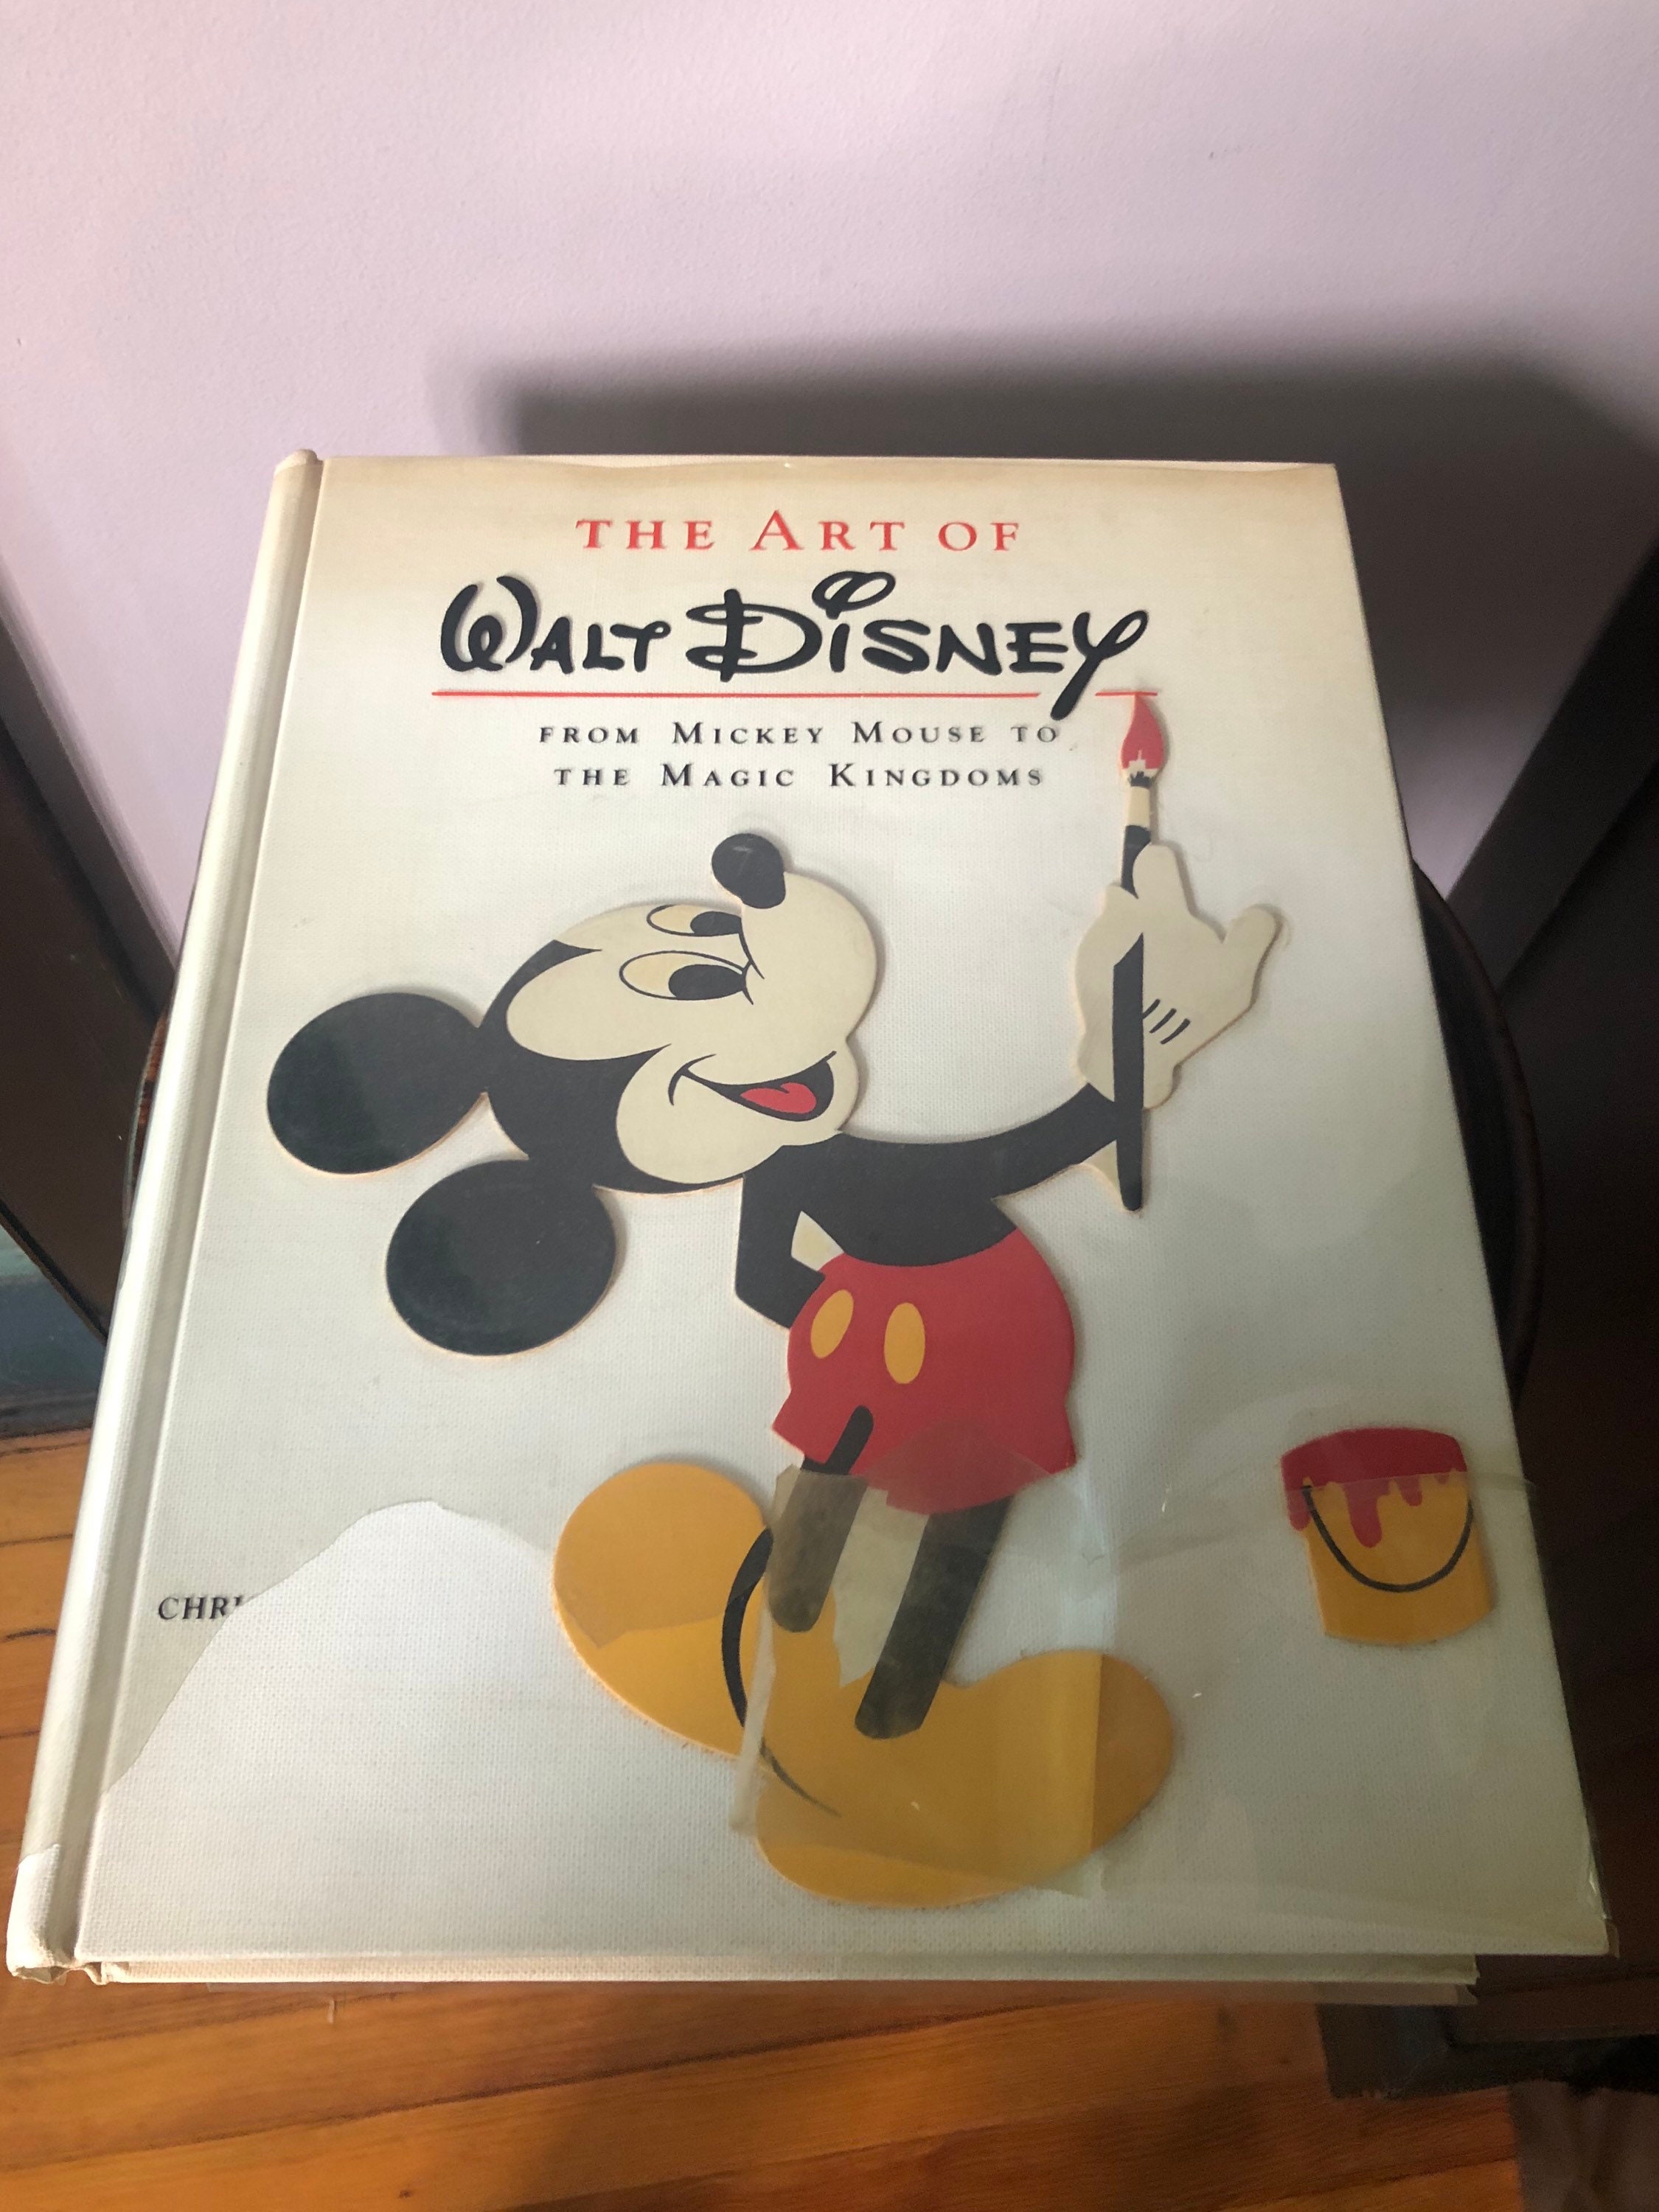 The art of Walt Disney by Christopher Finch - Etsy 日本